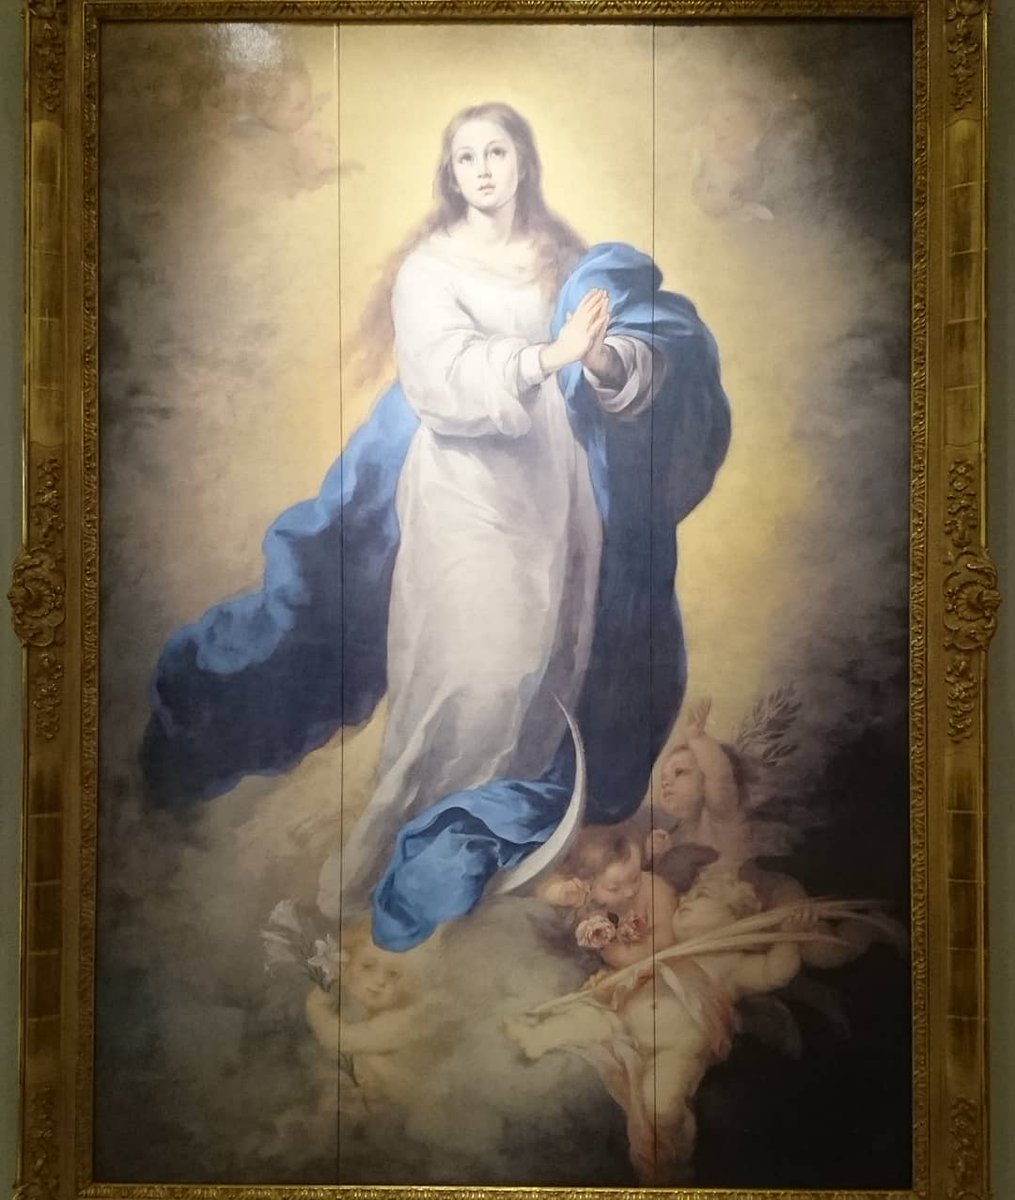 Otsukamuseum おうちで名画鑑賞94 ムリーリョ 無原罪の御宿り 1660 1665年頃 純白の衣に青いマントを着た聖母マリア が金色の光の中で手を合わせています この主題を絵画化するには 細かい規則 約束事 がありましたが 画家は それらを最小限に